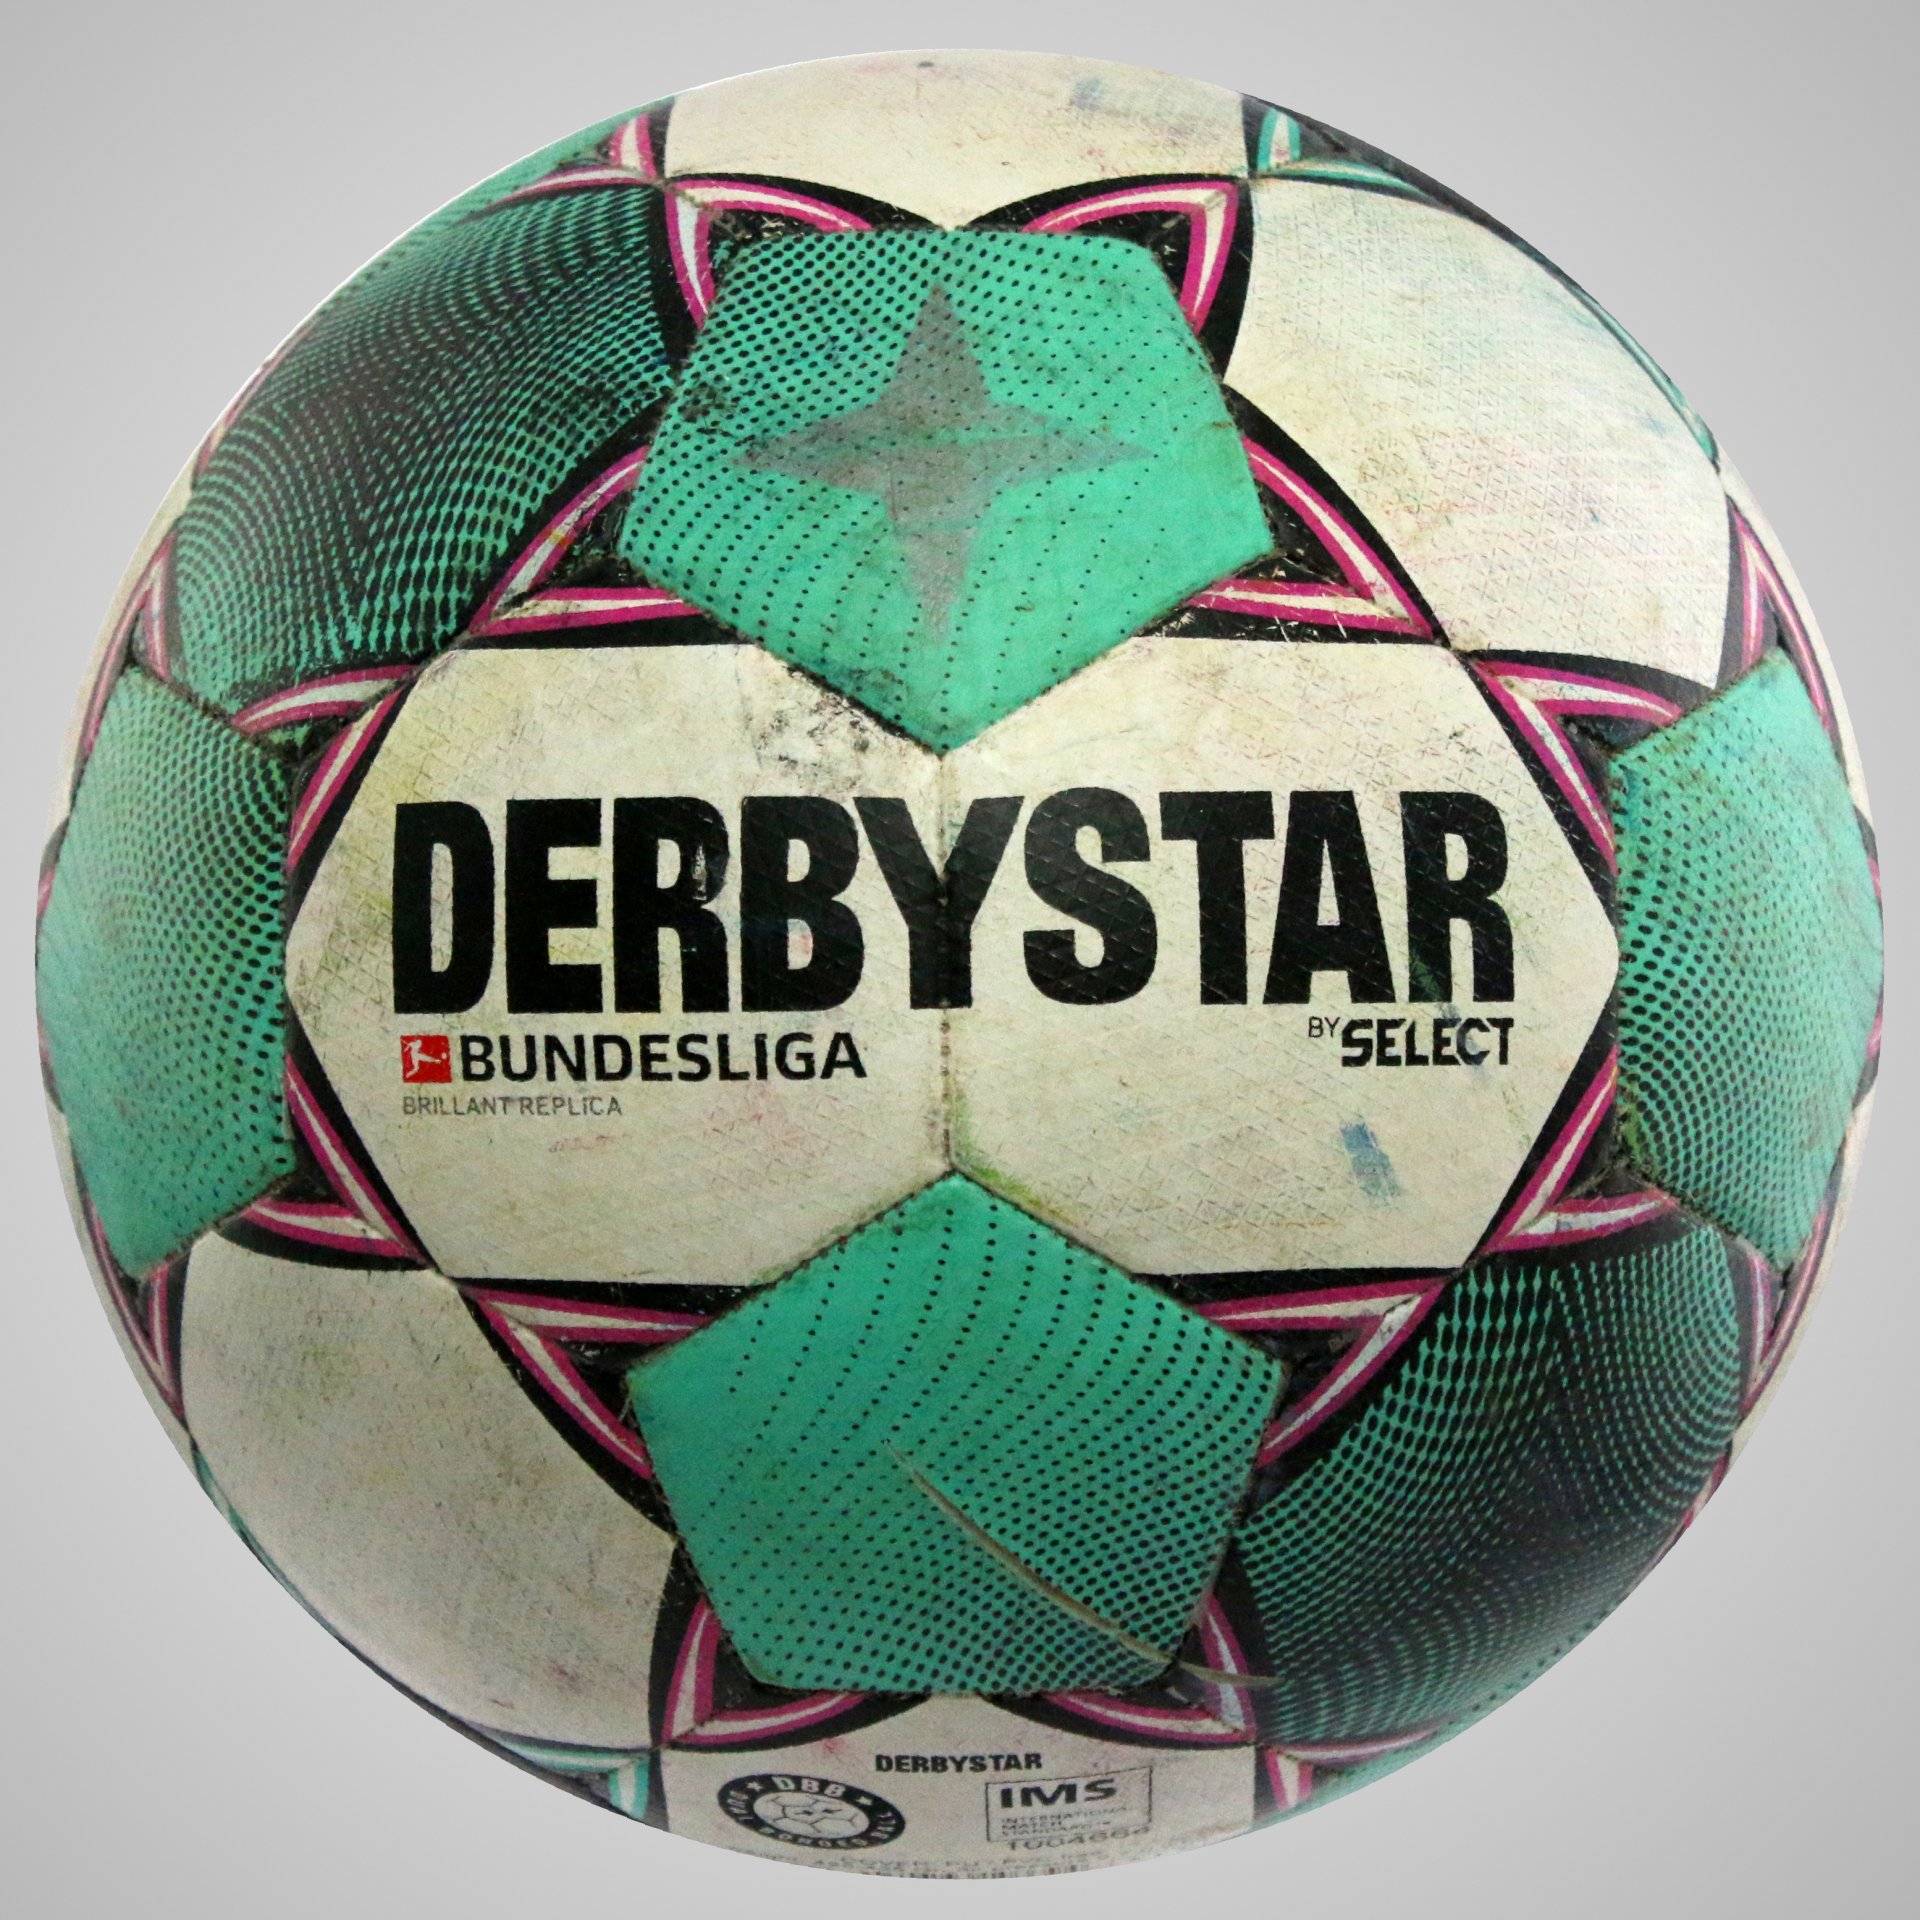 Derbystar Bundesliga Brilliant Replica 2020